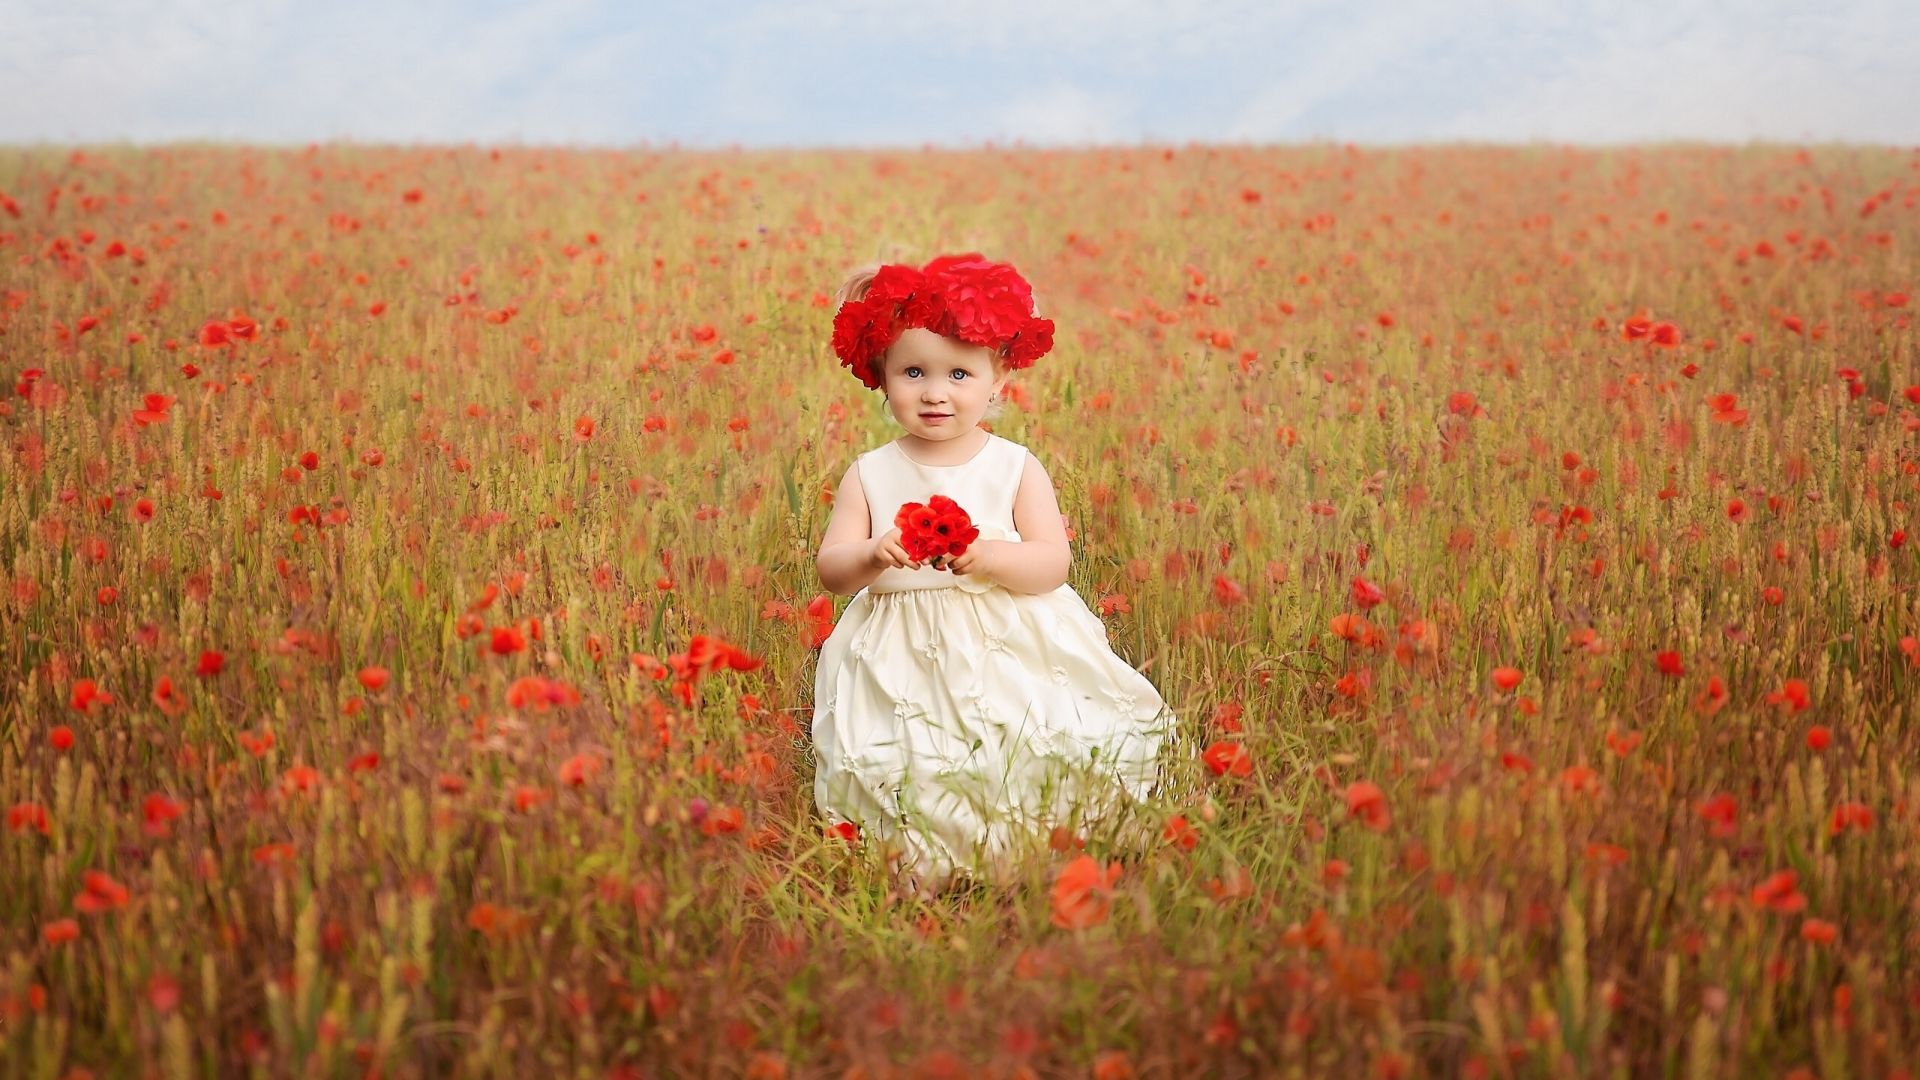 Desktop Wallpaper Cute Baby Girl In Poppy Field, Hd Image, Picture,  Background, C5pyqb